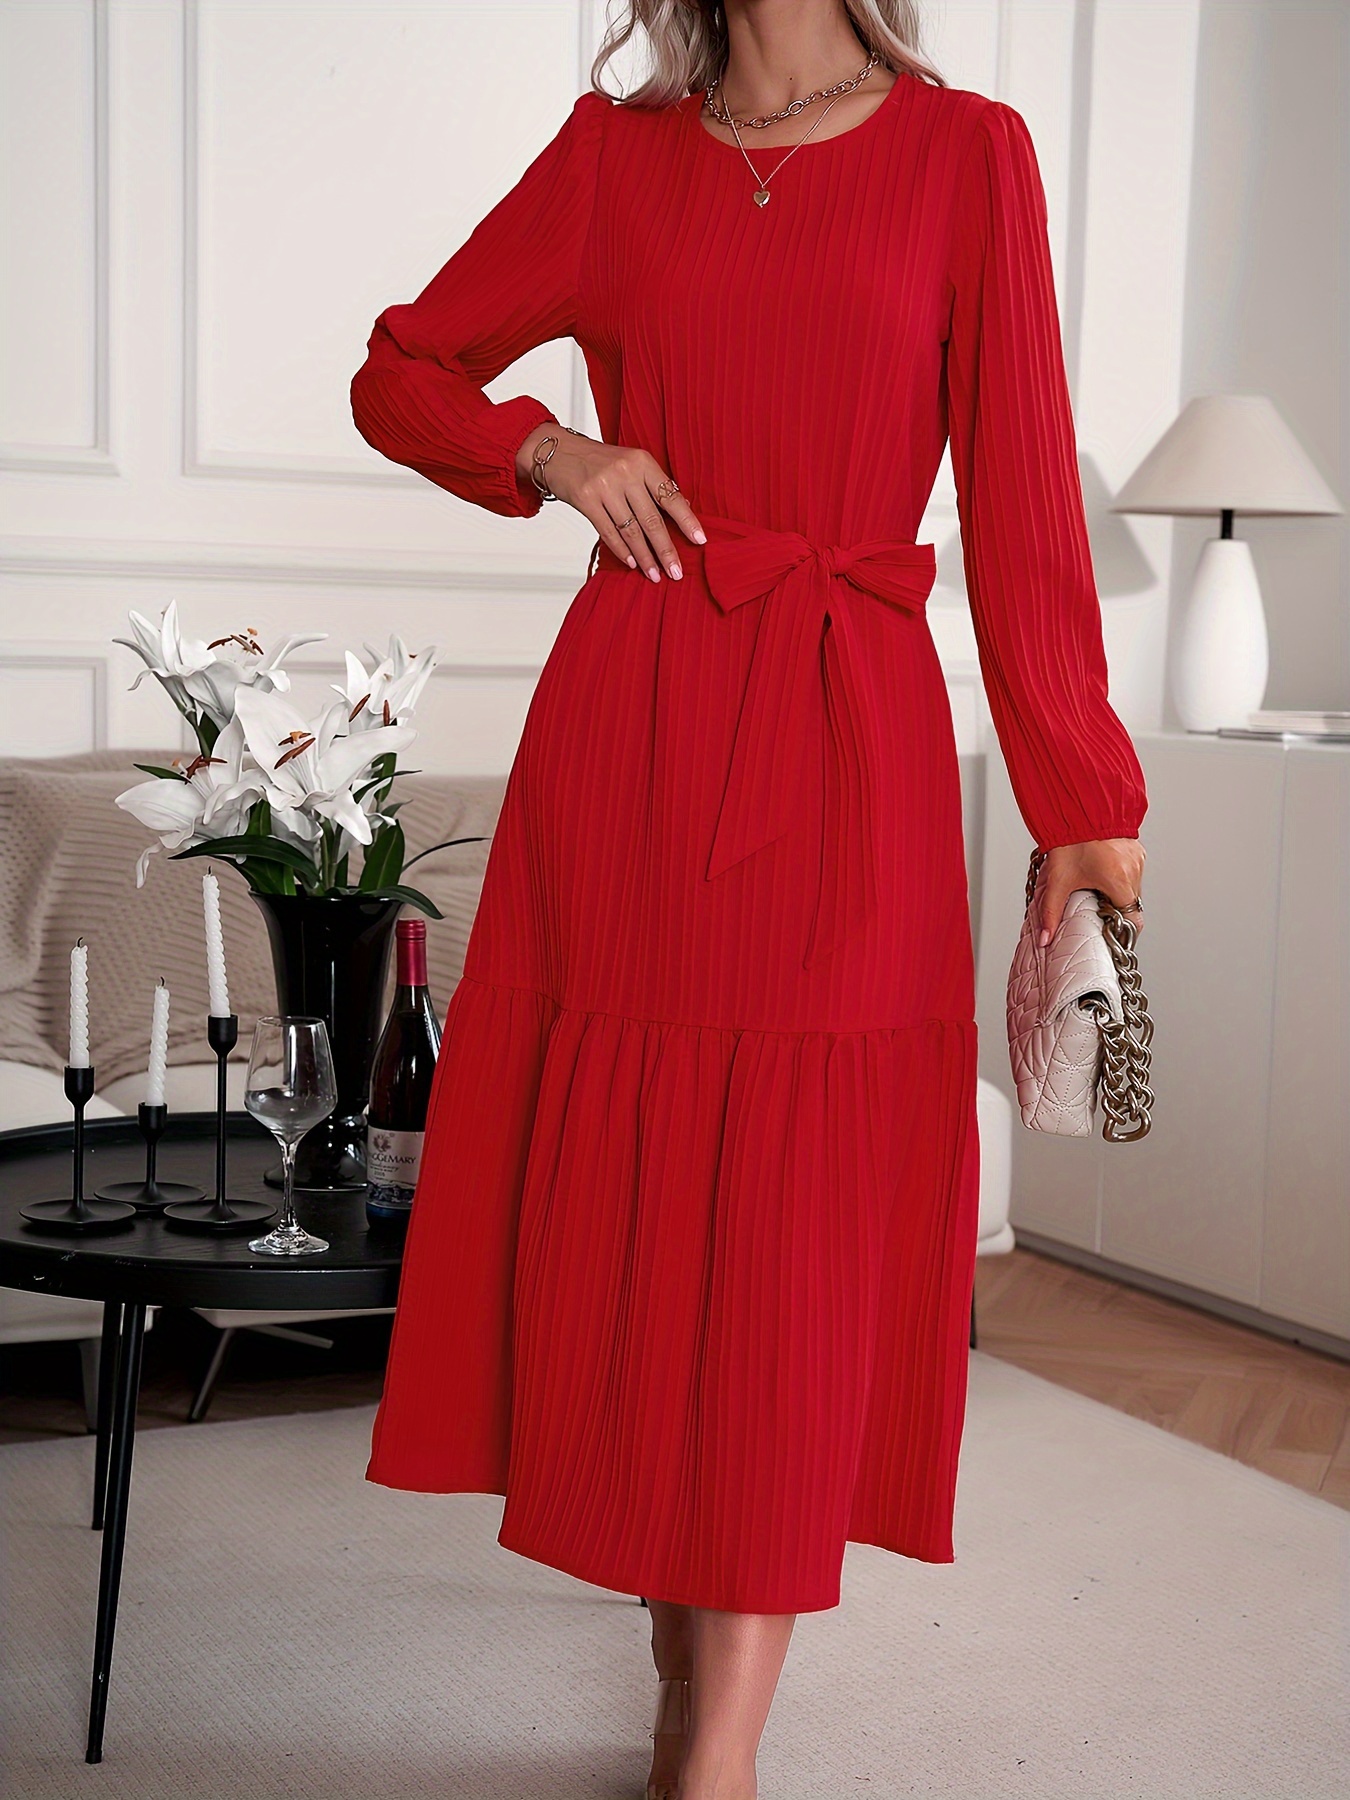 Red Dresses for Women